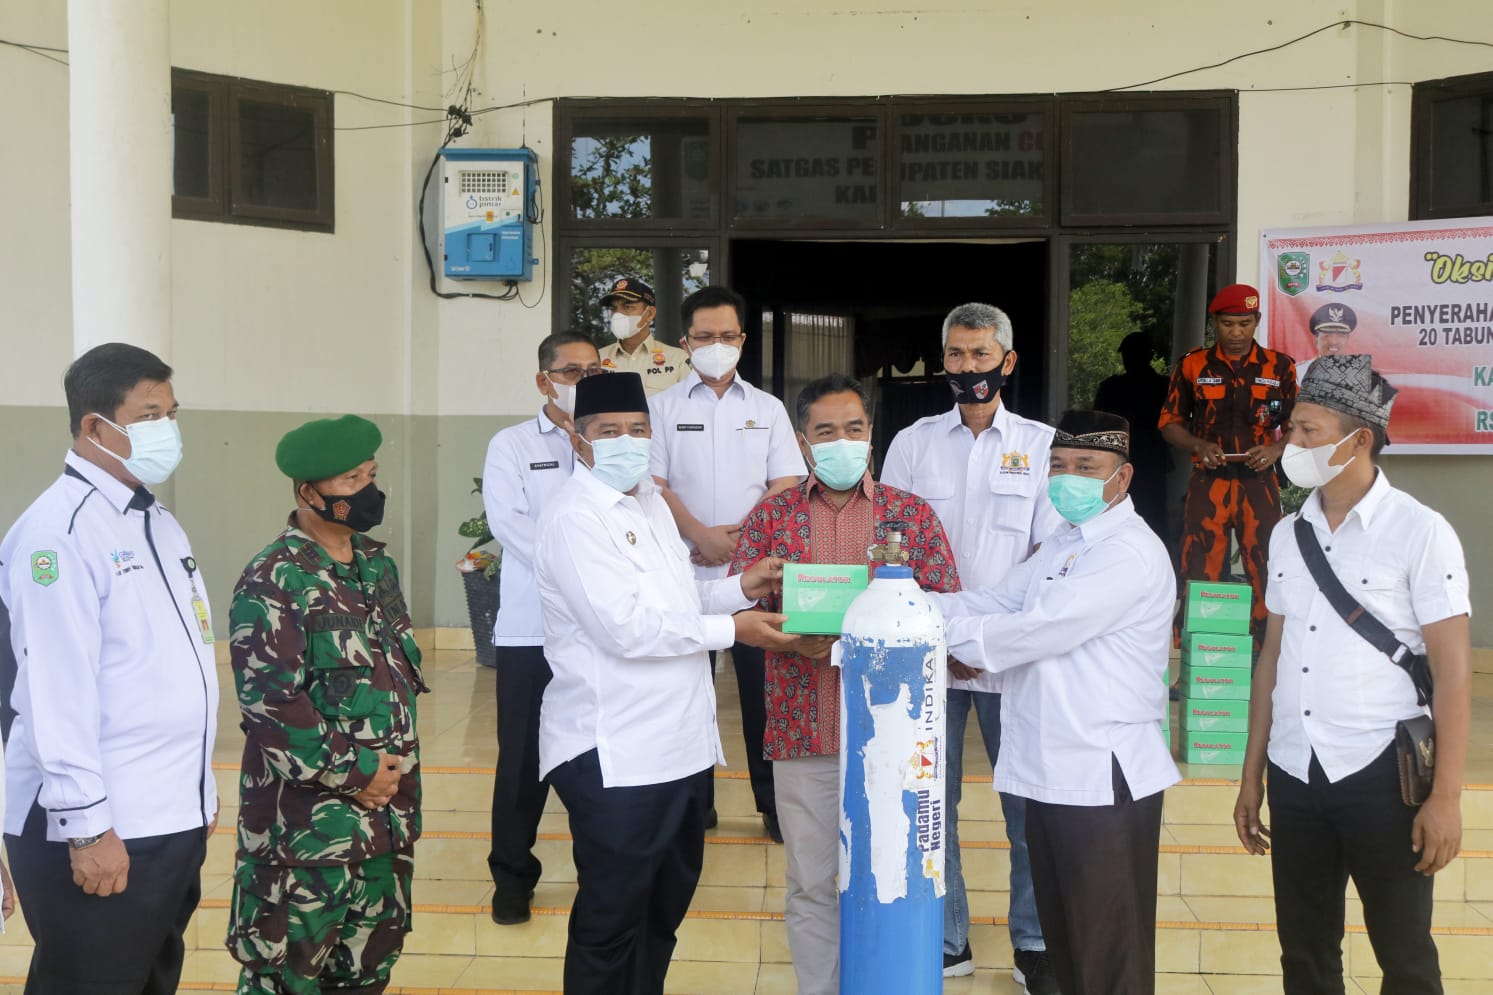 Pemda Siak terima 20 Tabung Oksigen, dan 10 Regulator bantuan dari Kadin Provinsi Riau